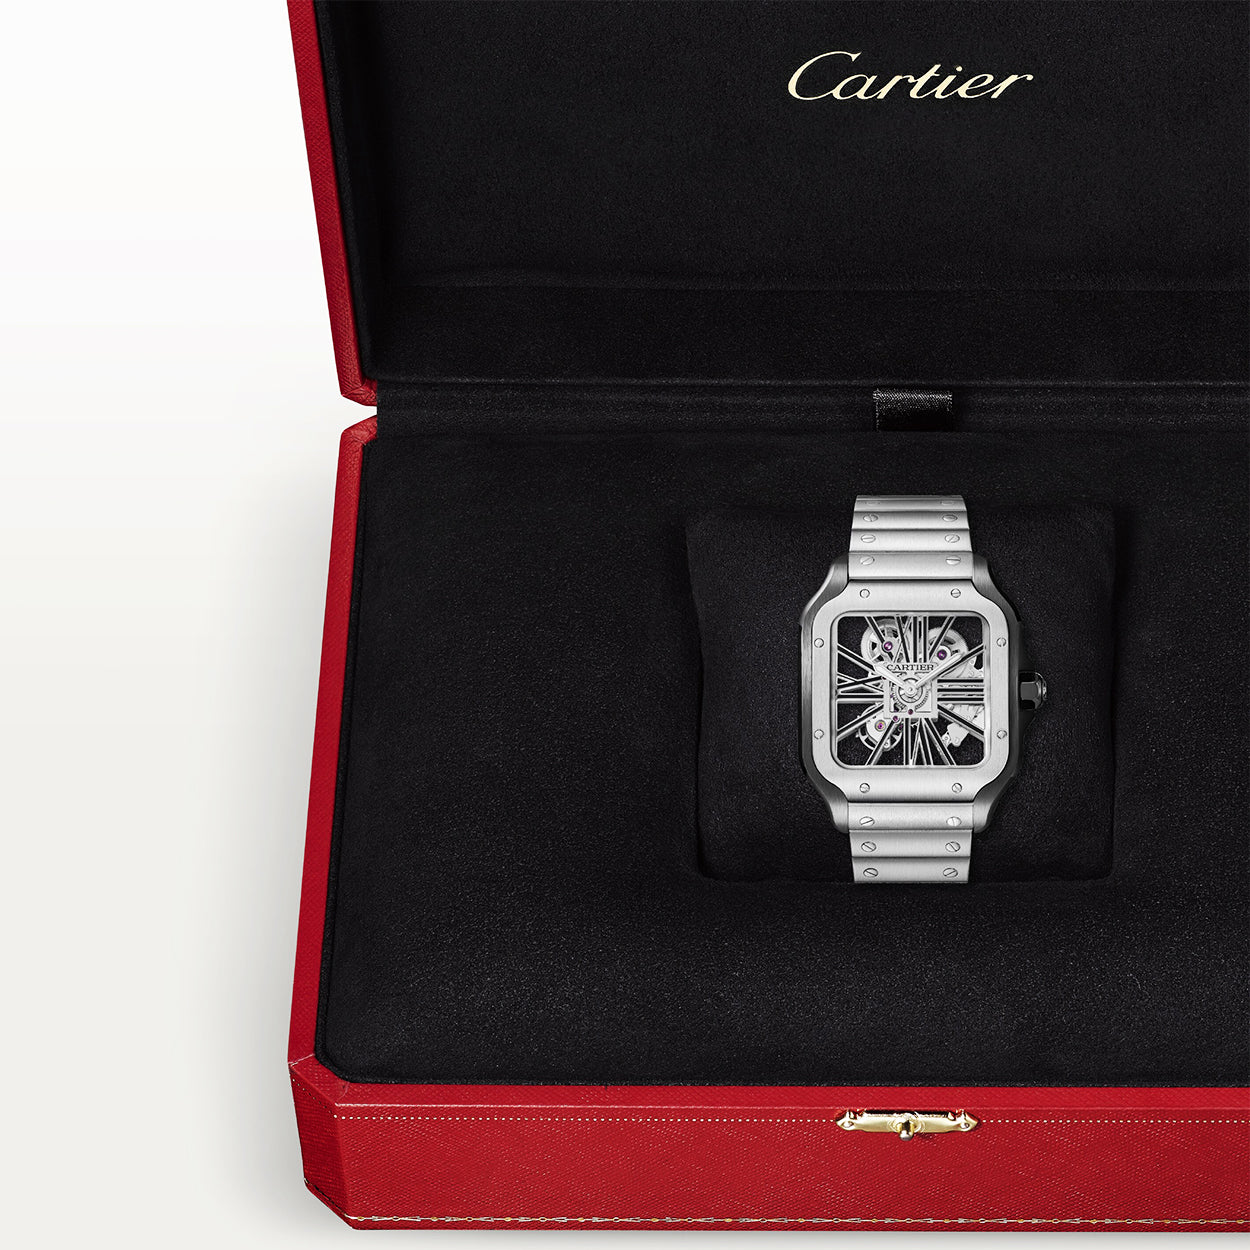 Santos de Cartier Large Skeleton Steel & Black ADLC Watch